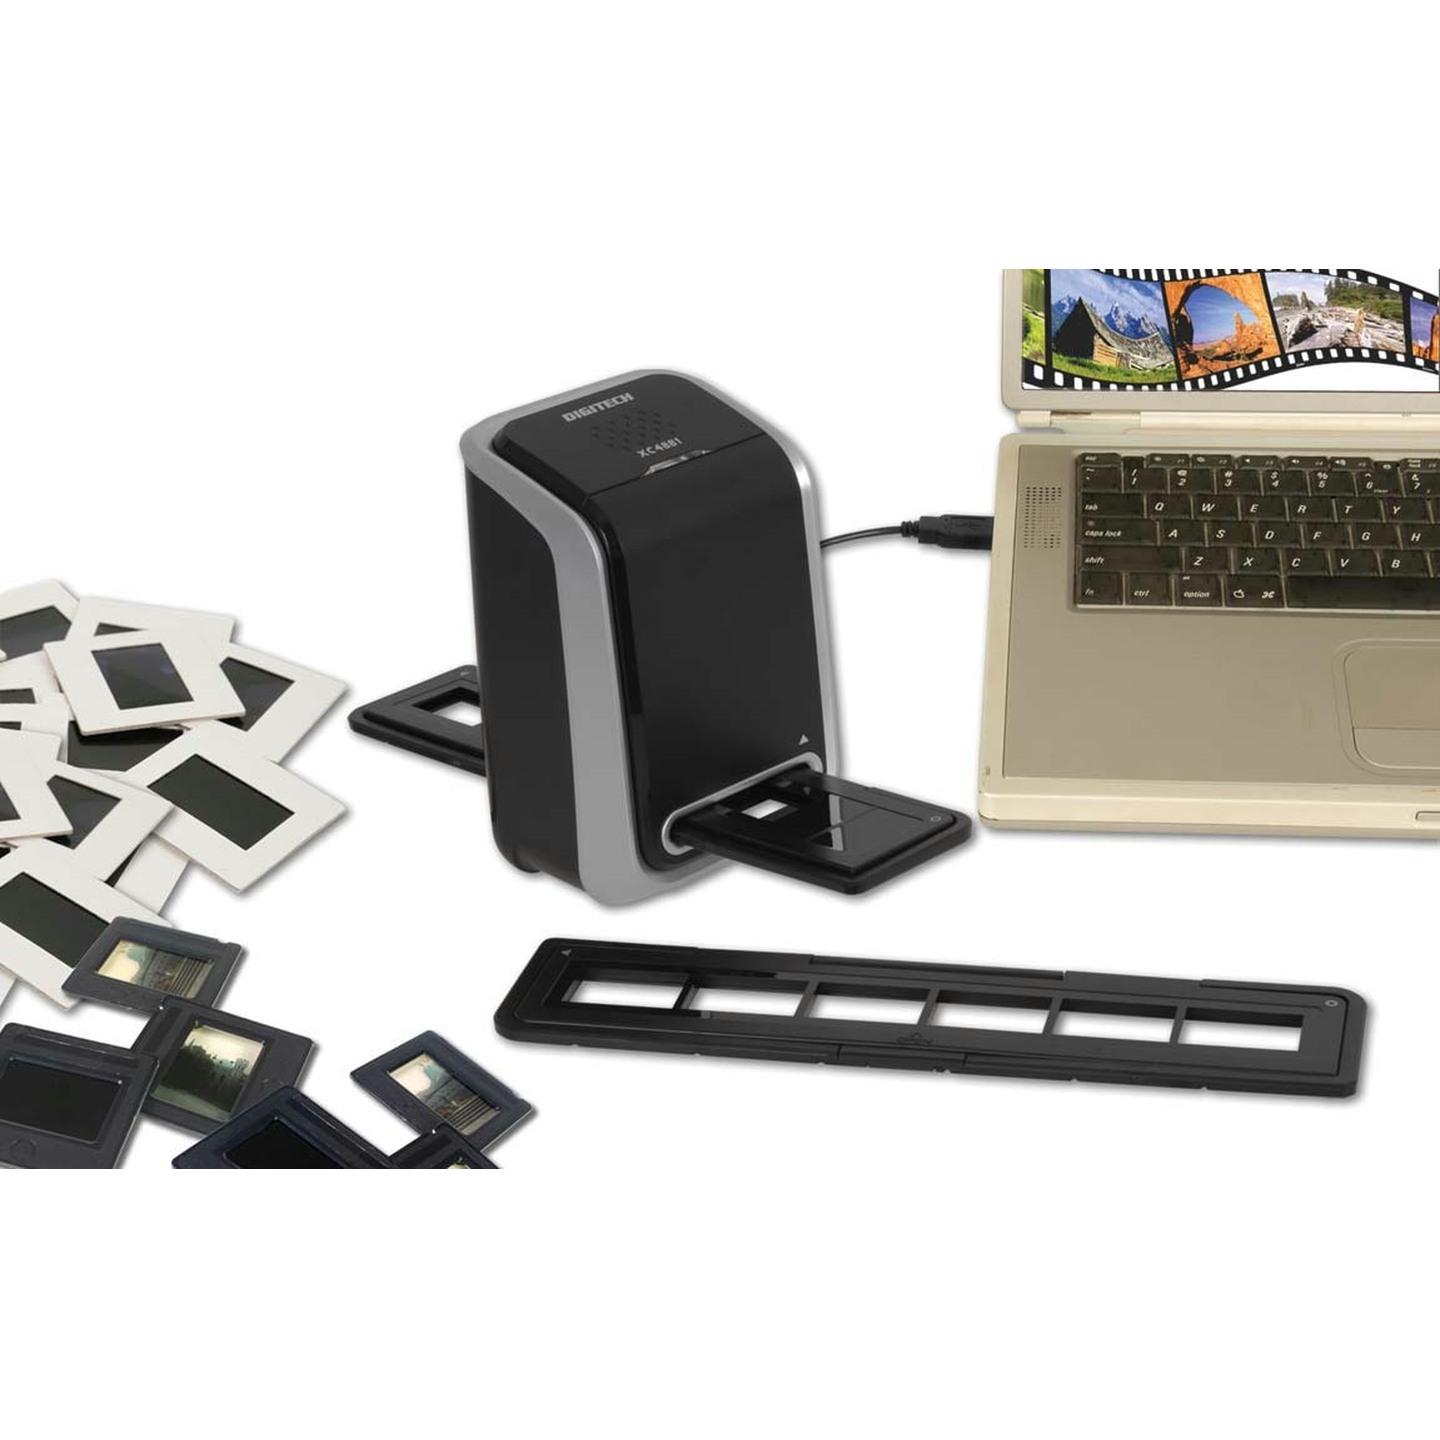 USB Slide/Film Scanner